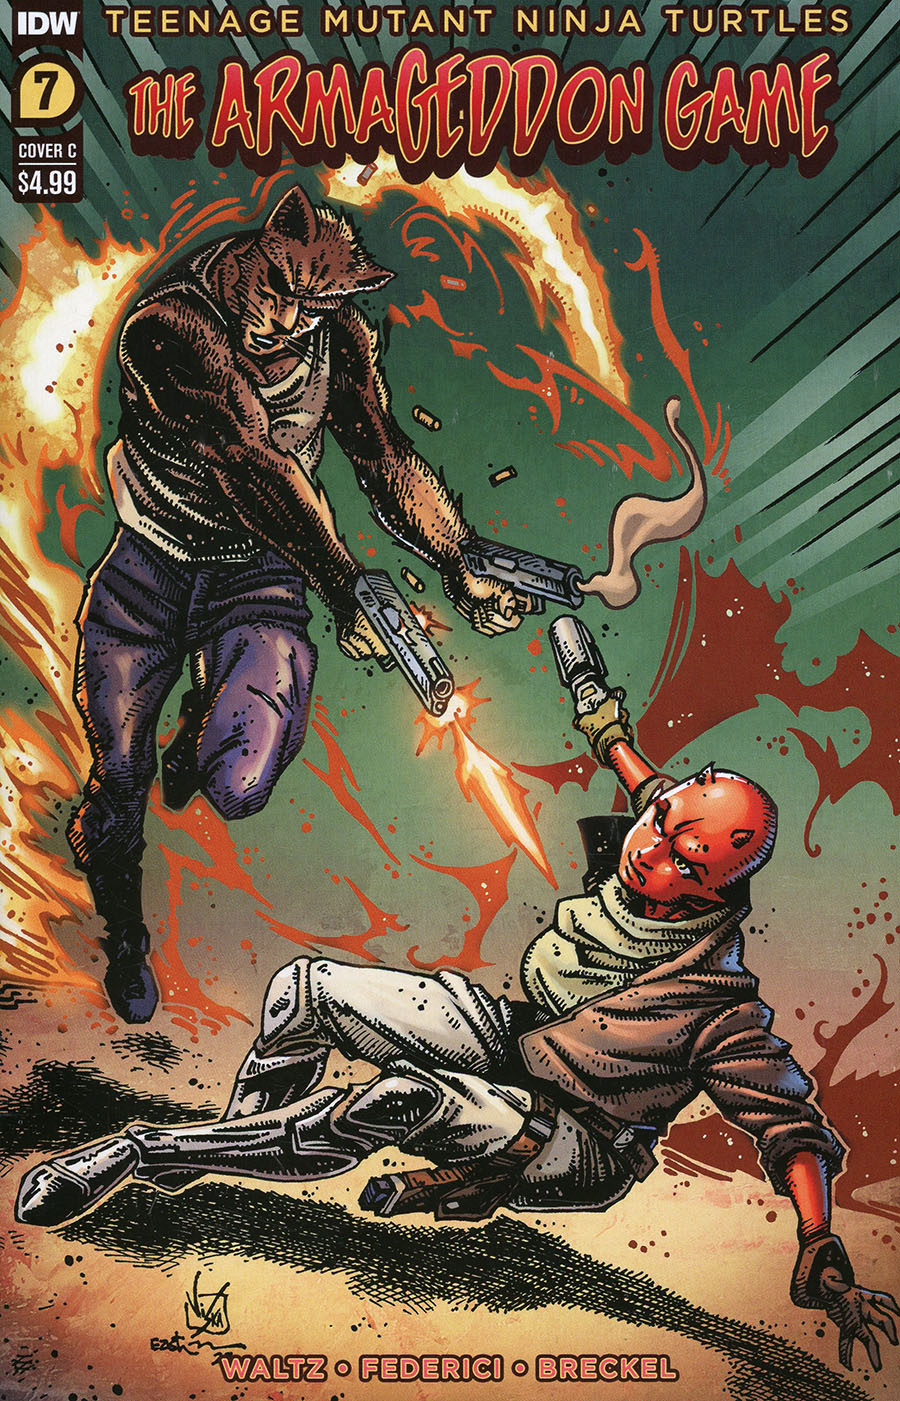 Teenage Mutant Ninja Turtles Armageddon Game #7 Cover C Variant Kevin Eastman Cover